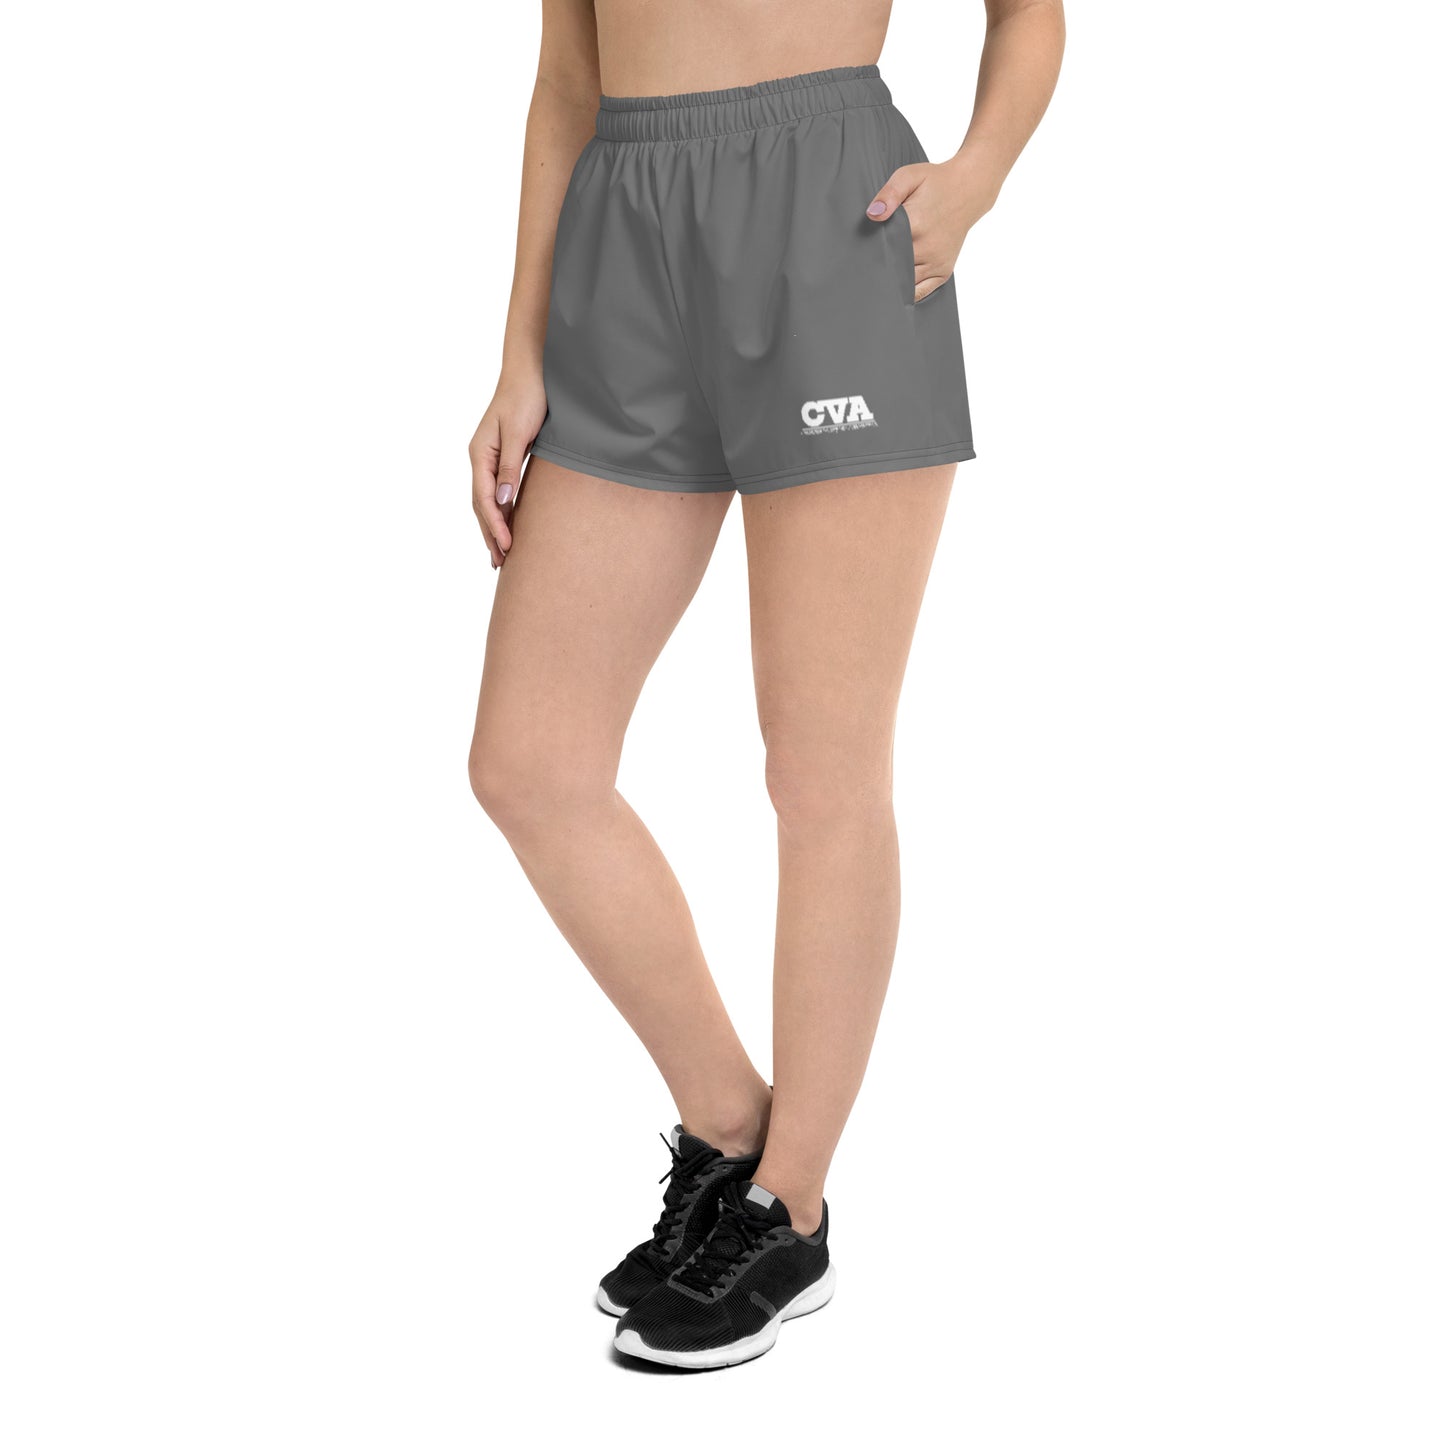 Women's Athletic Shorts: 2.5" - Light Grey